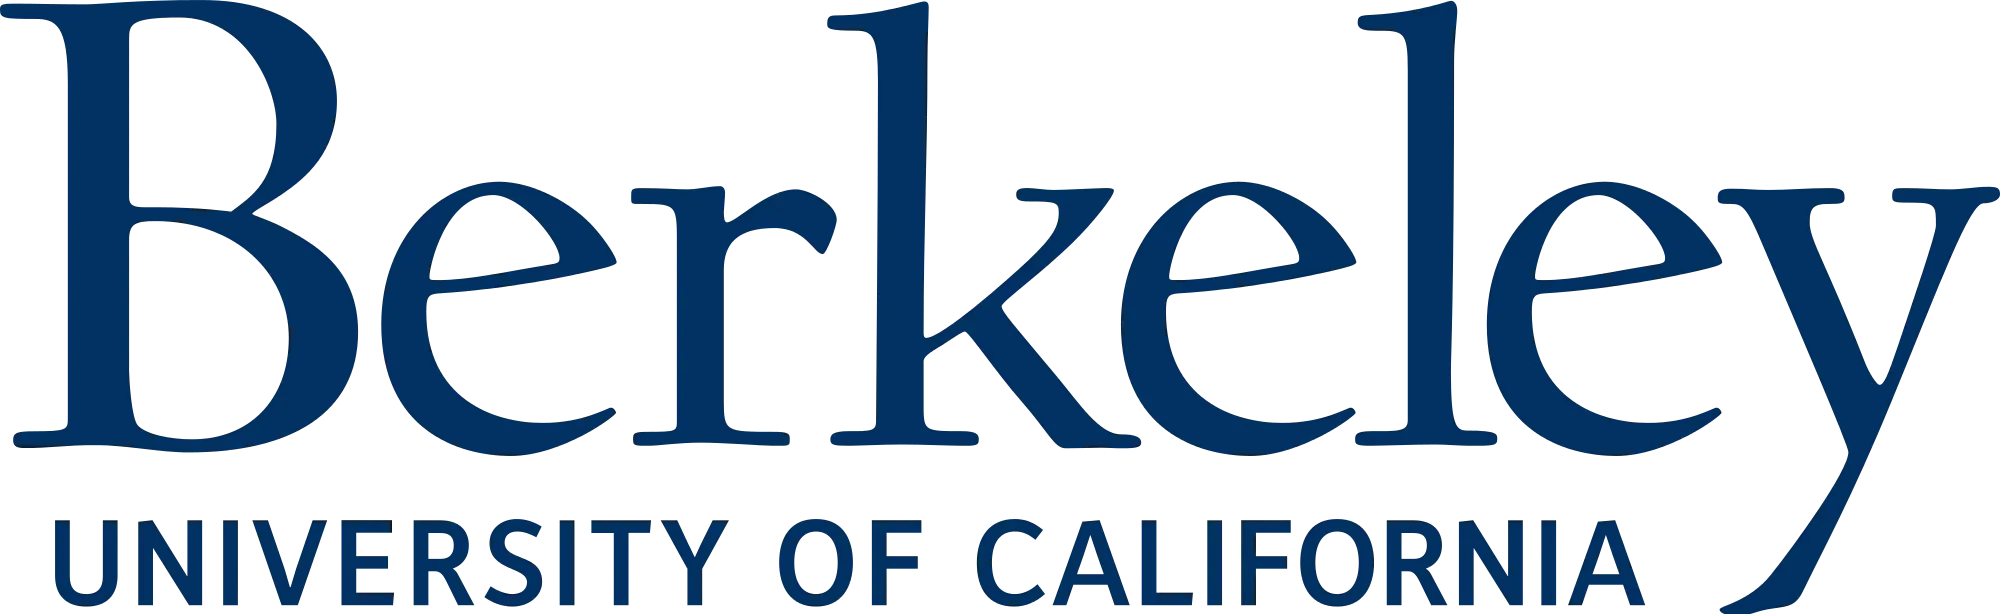 Berkely UC logo